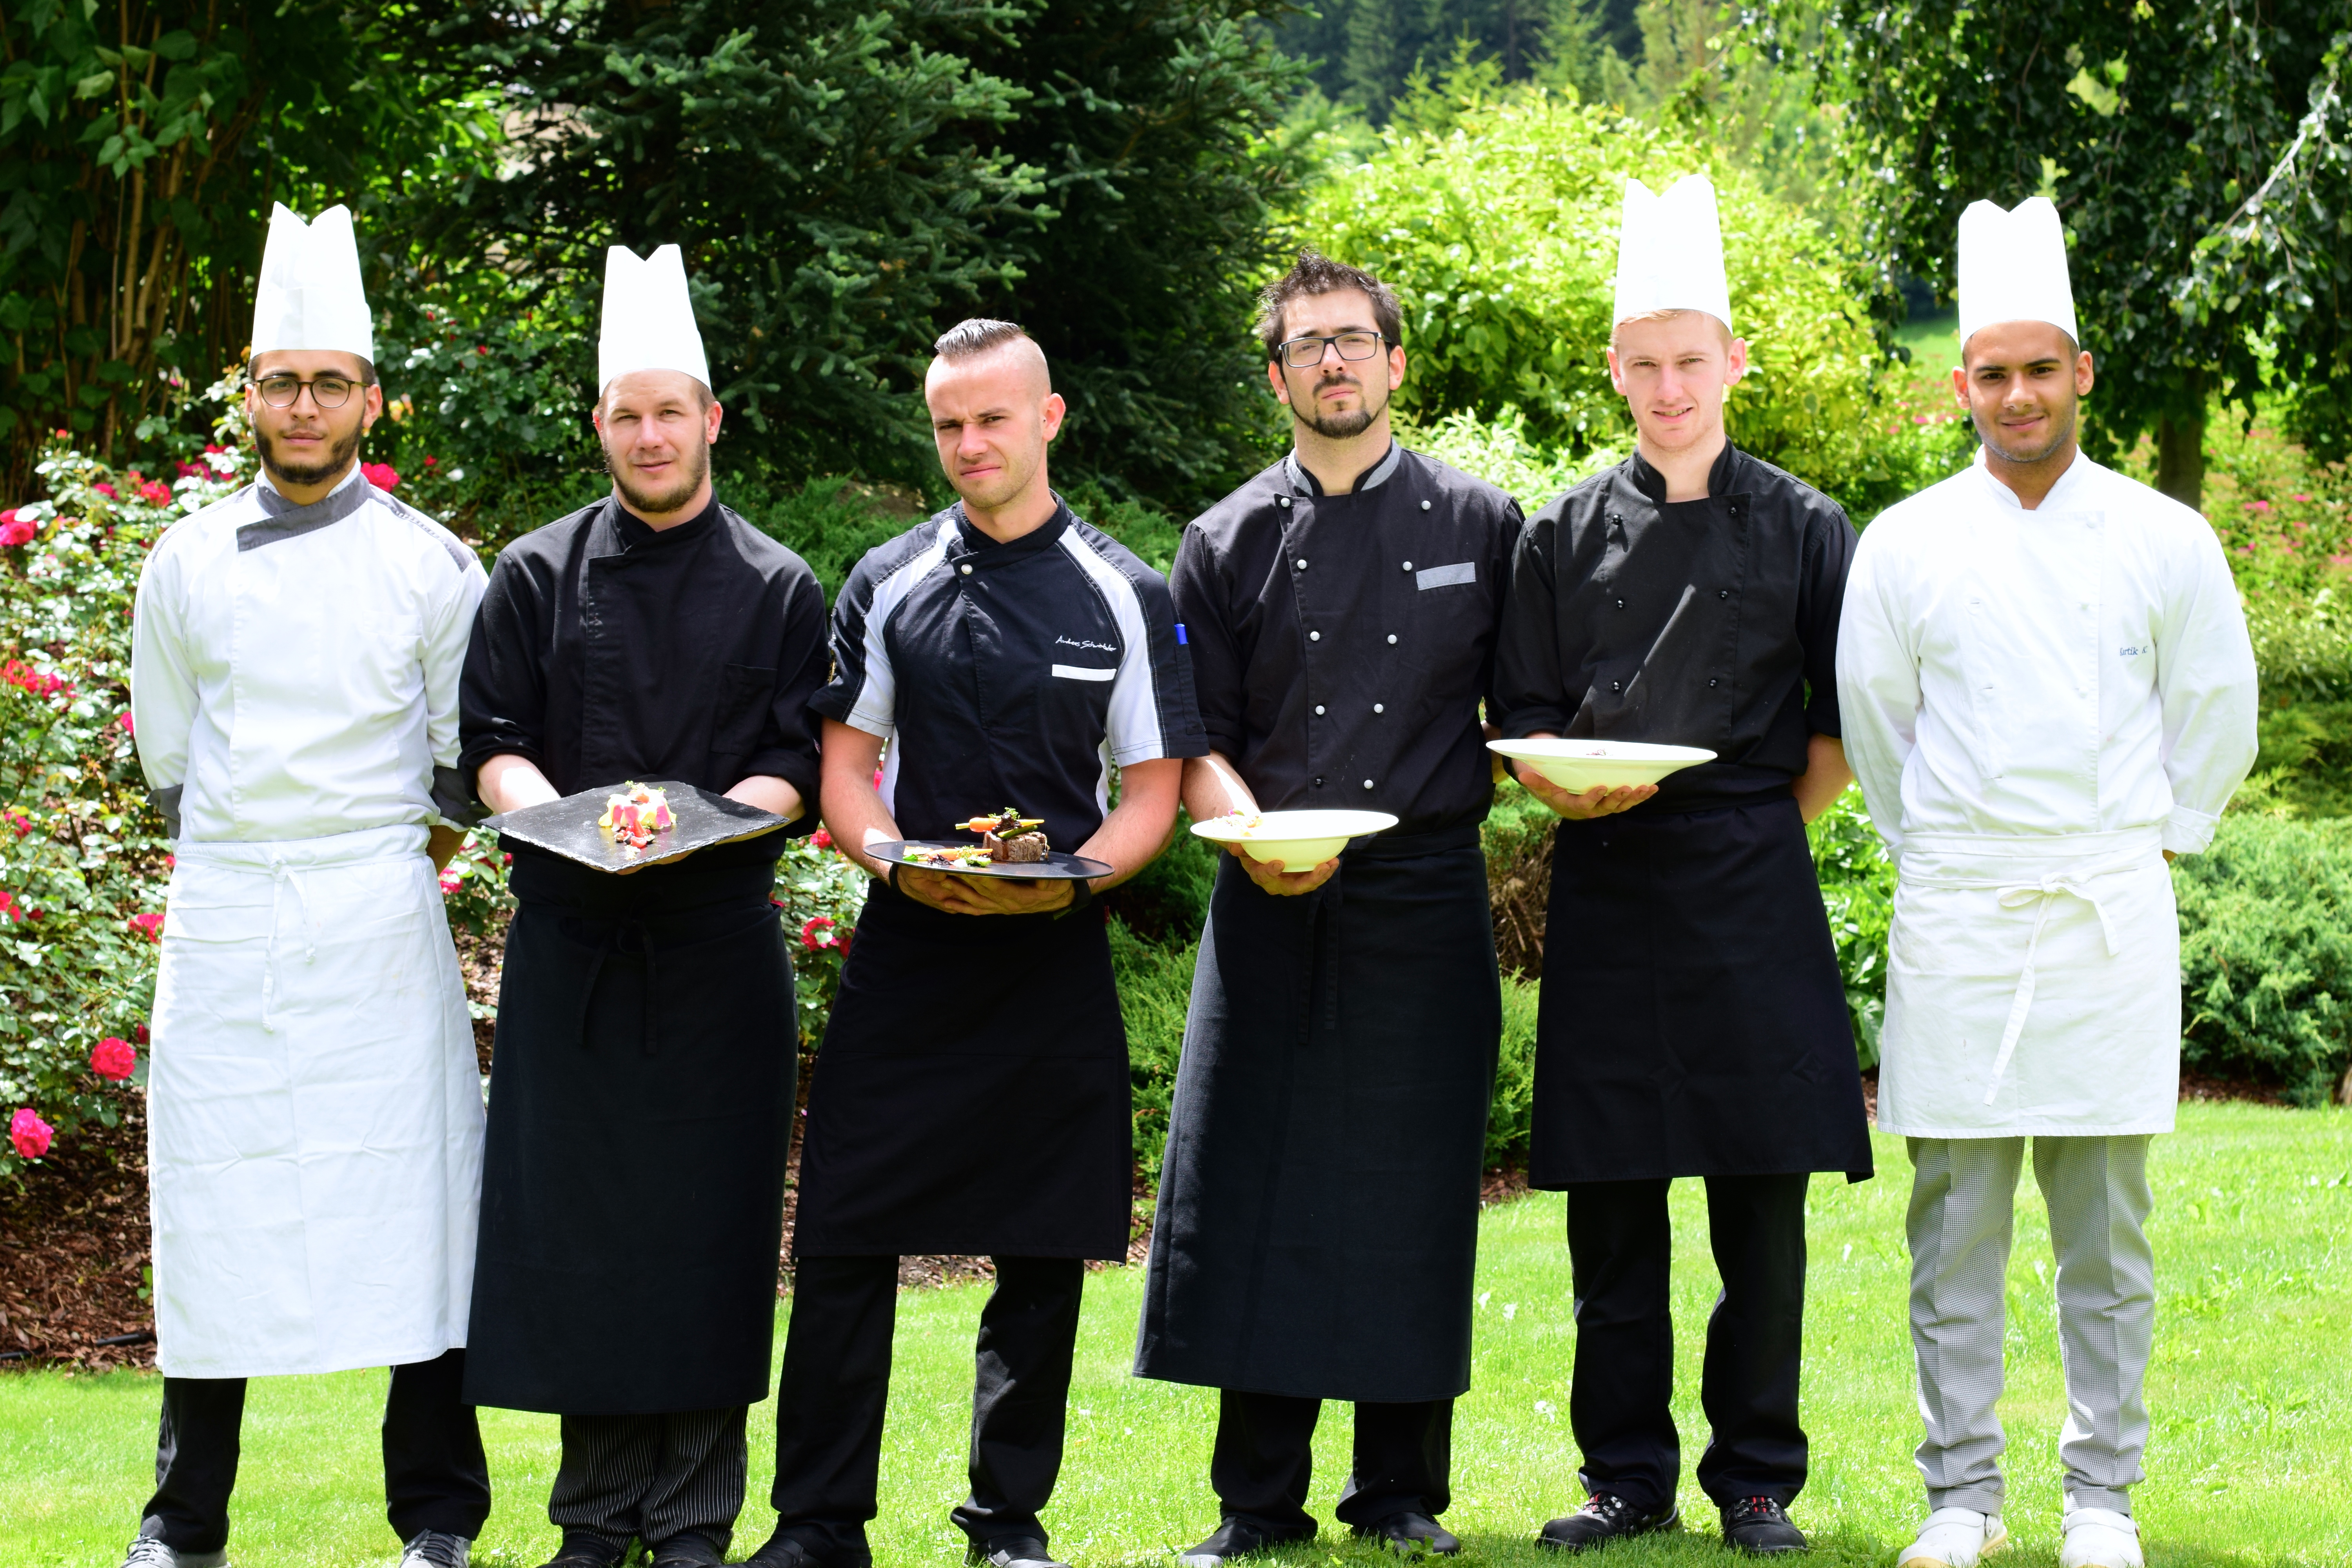 Alpen palace South Tyrol Andreas Schwienbacher cuisine gastronomy